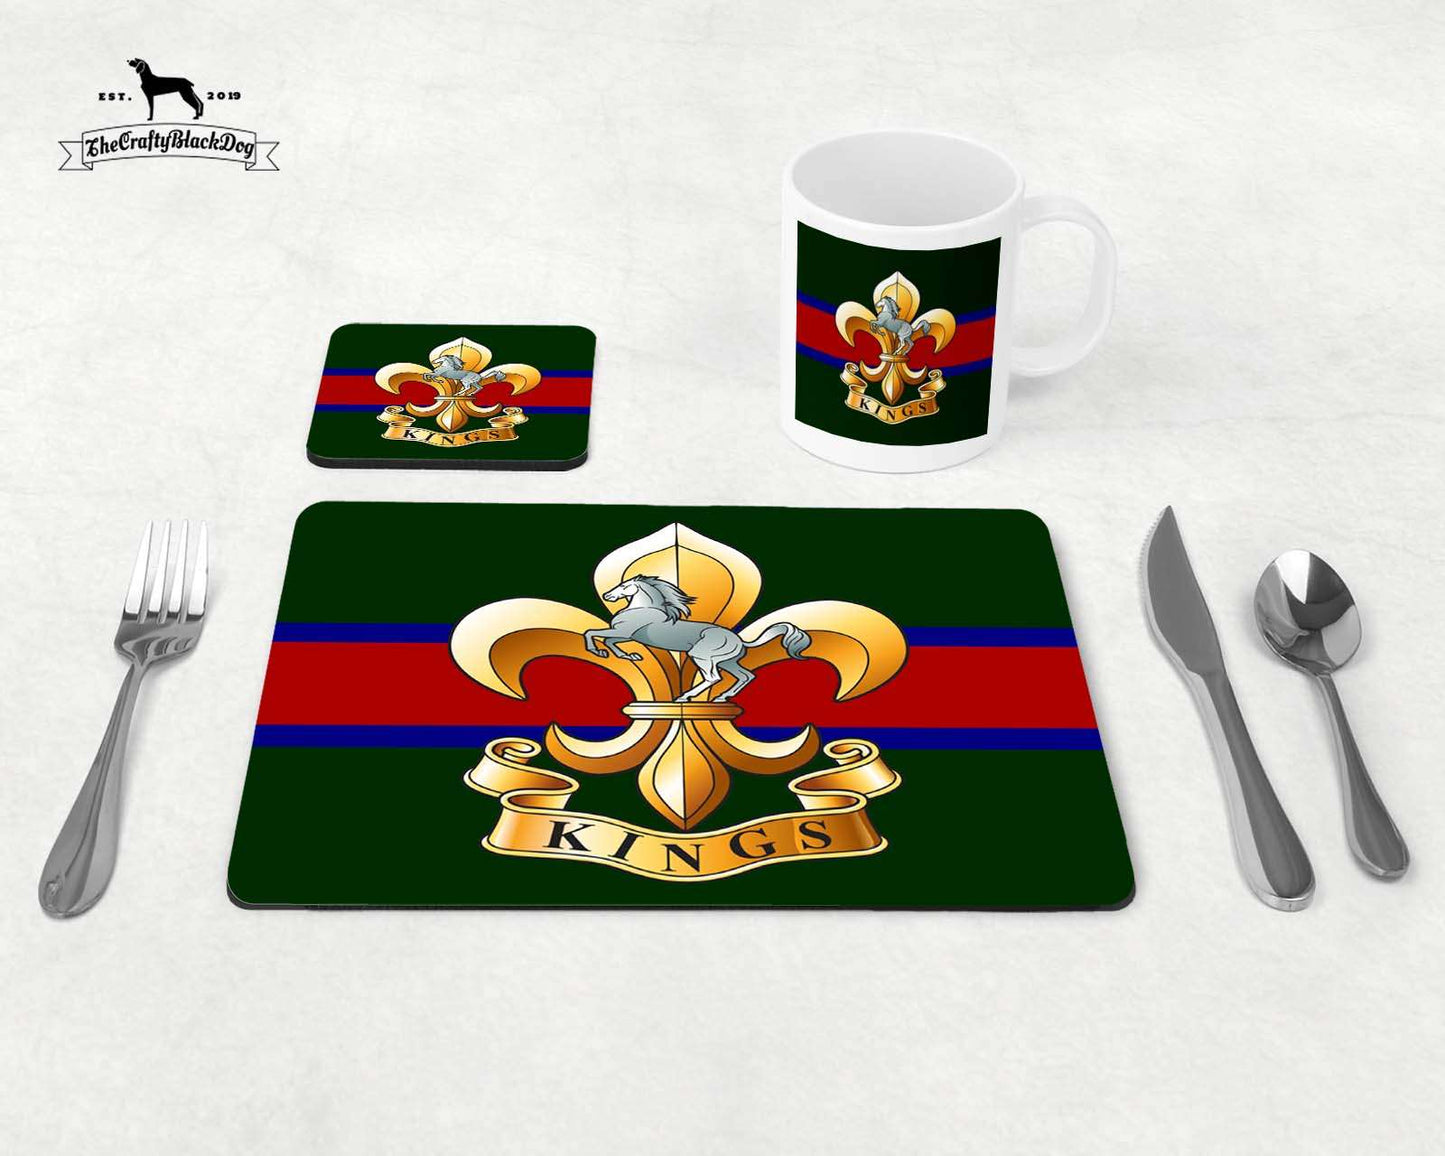 Kings Regiment - Table Set